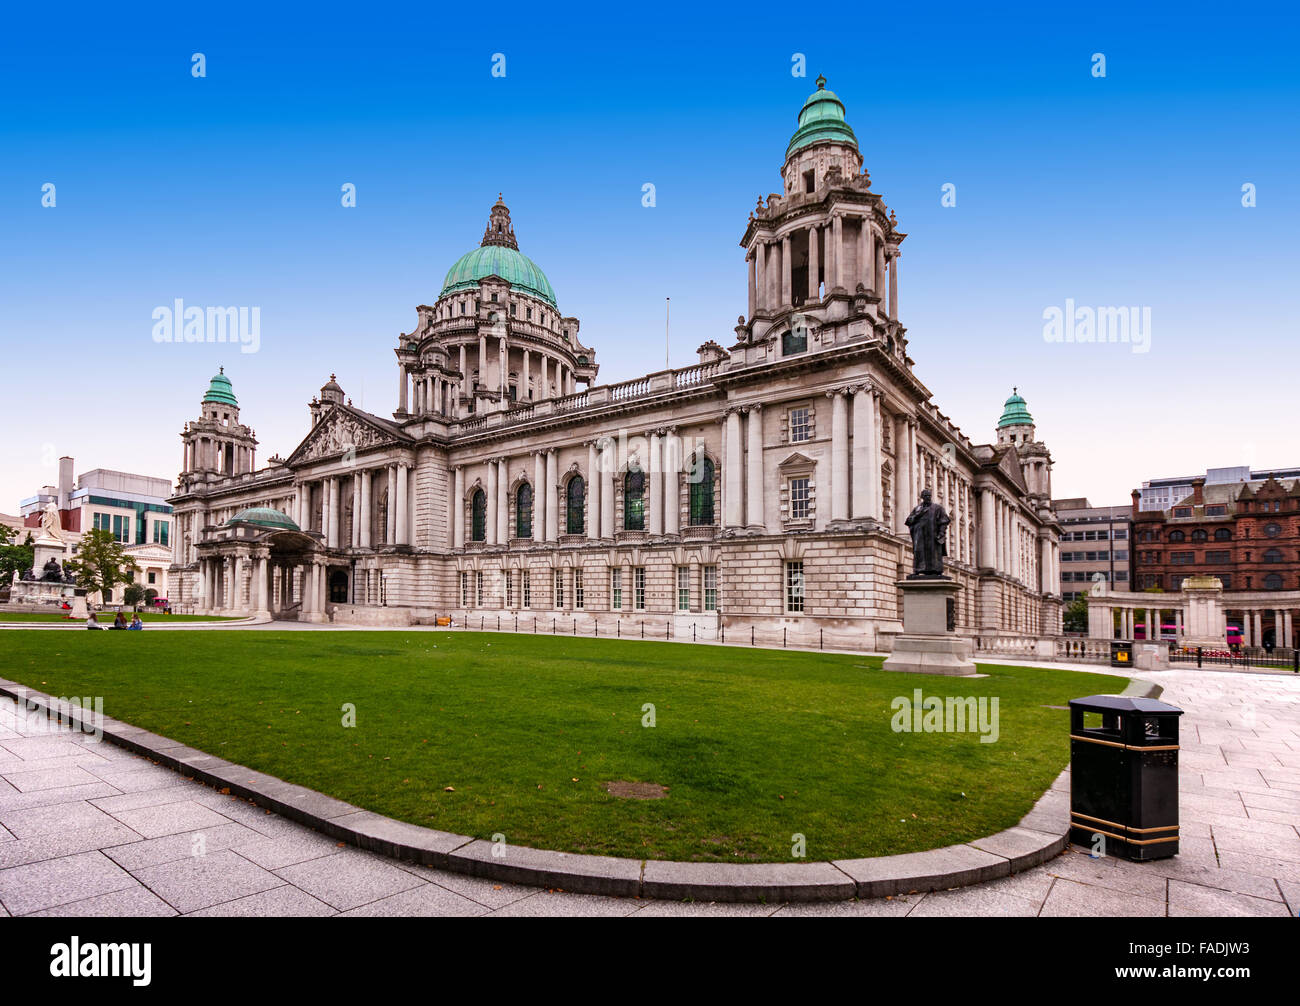 Belast City Hall in Northern Ireland, UK Stock Photo